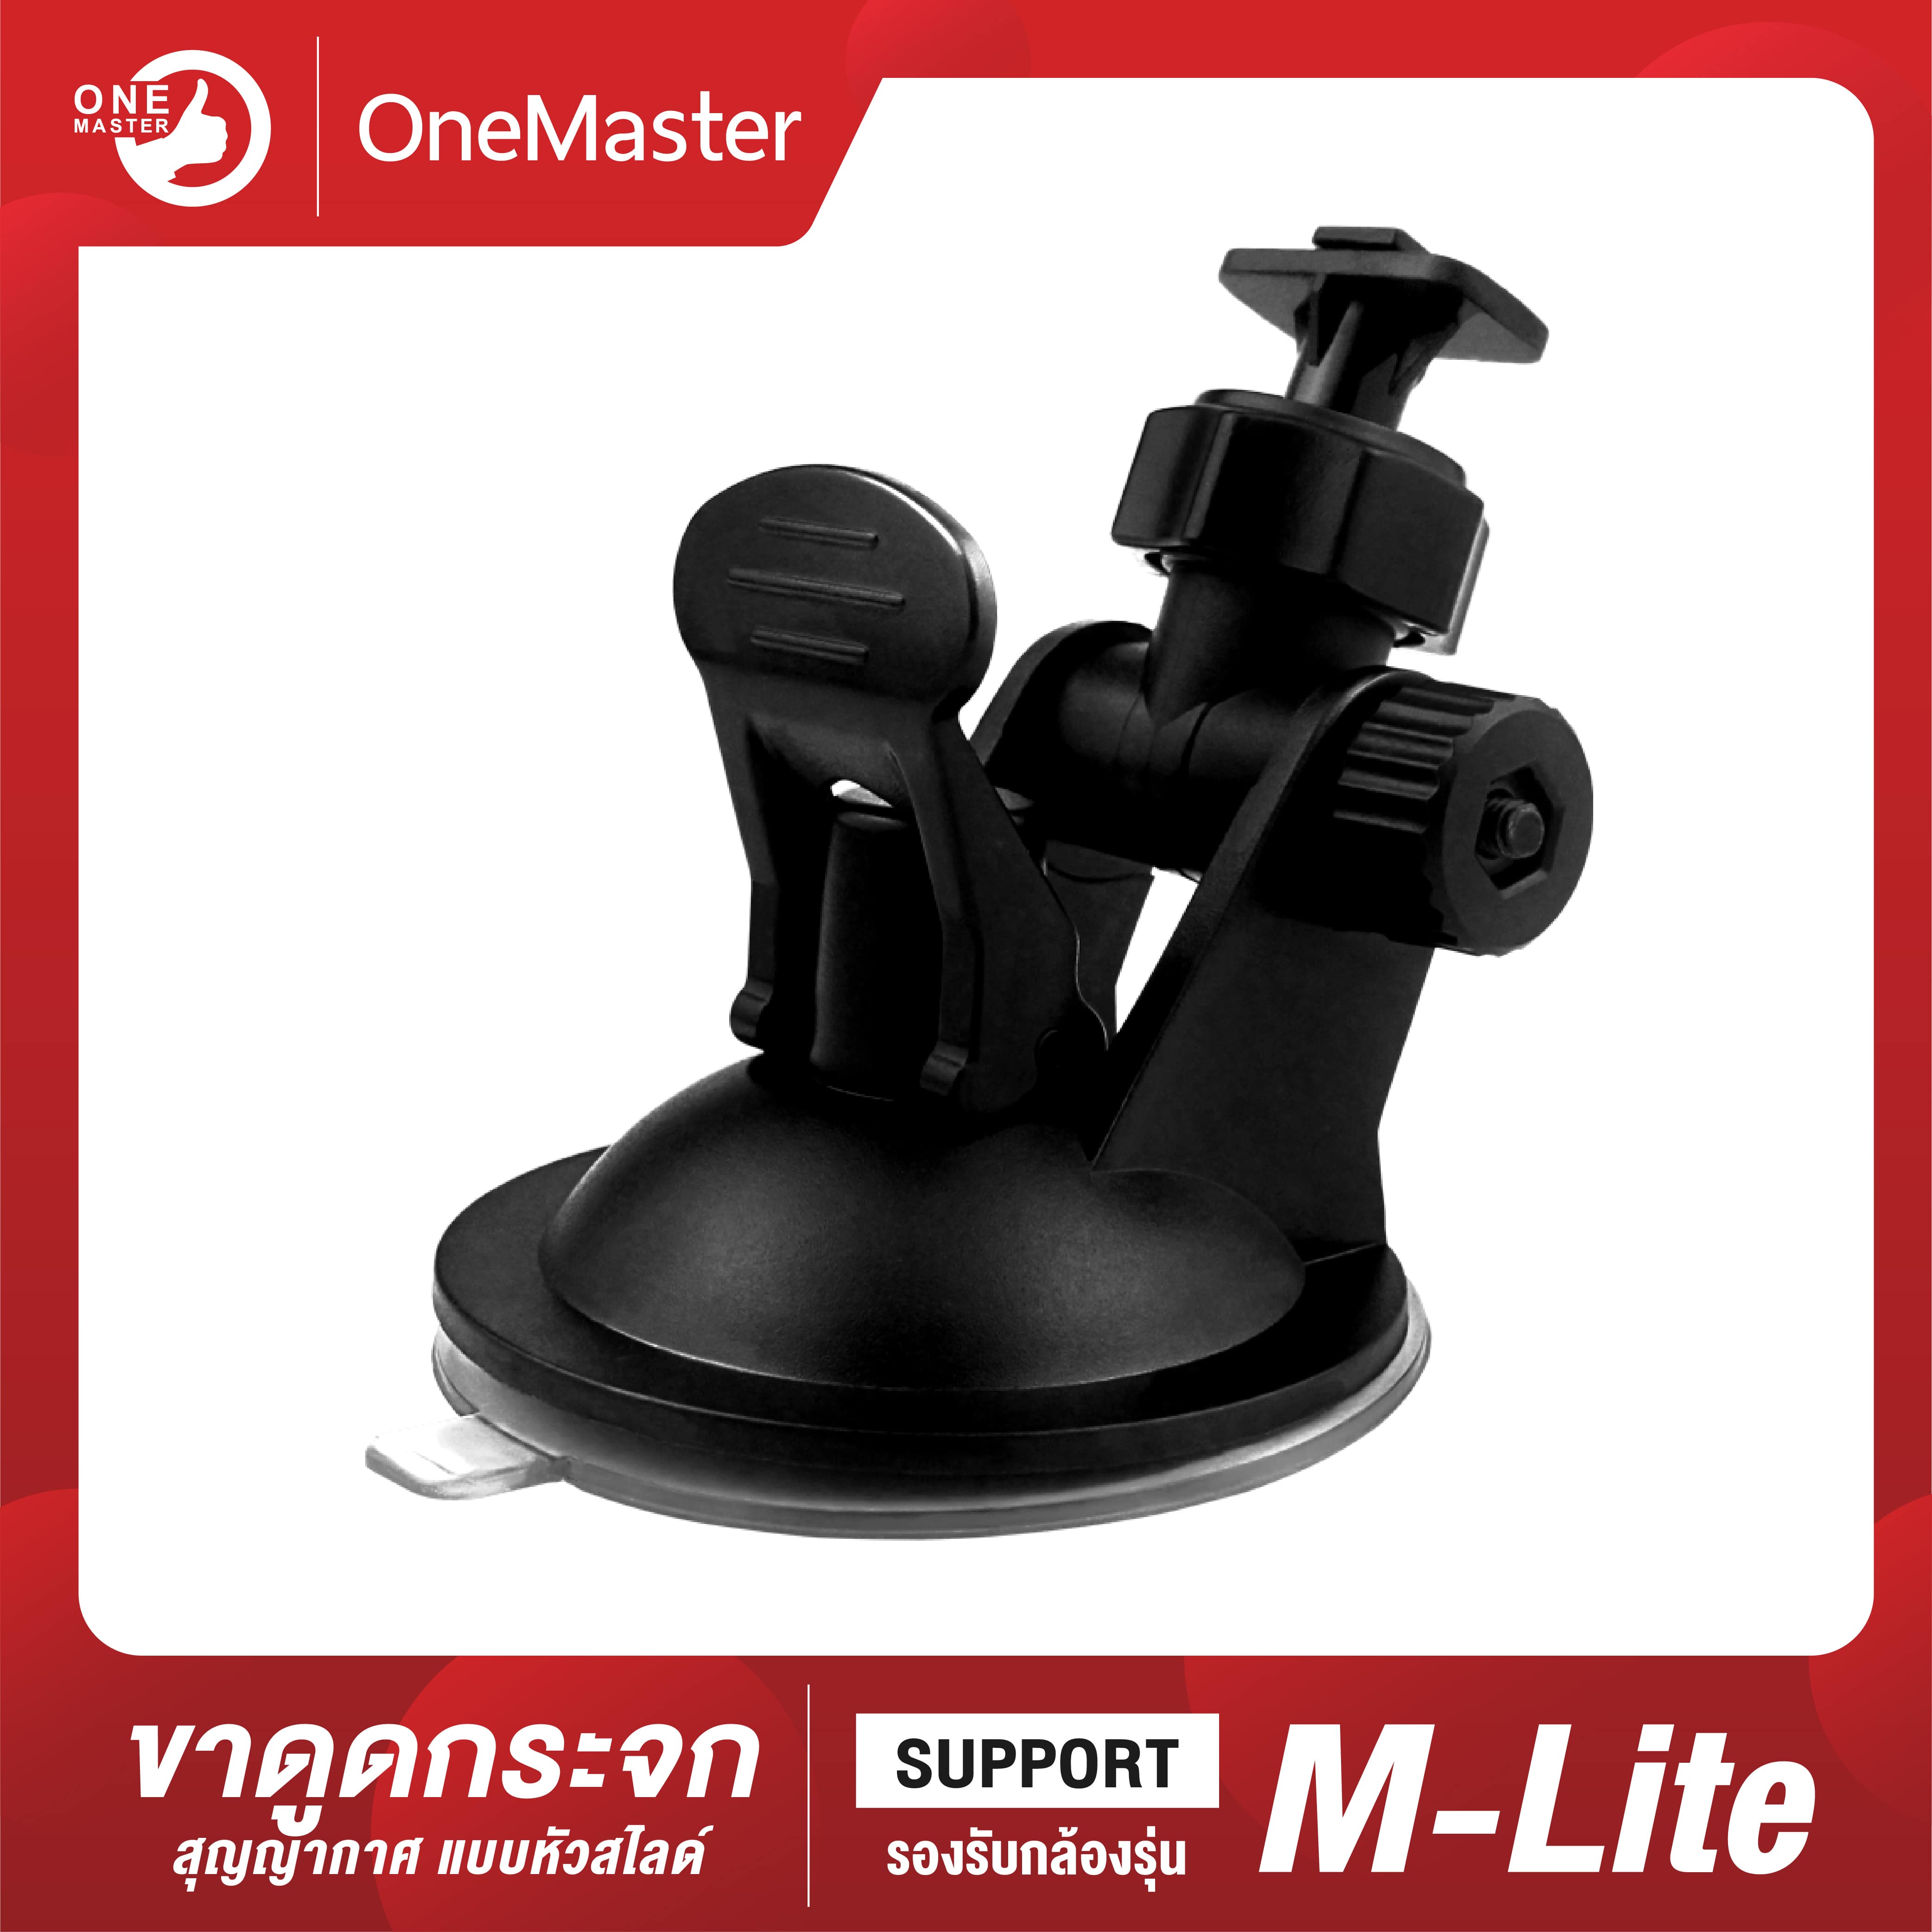 OneMaster ขายึดกล้องติดรถยนต์ ดูดกระจกสุญญากาศ (หัวสไลด์) สำหรับรุ่น M-Lite Plus